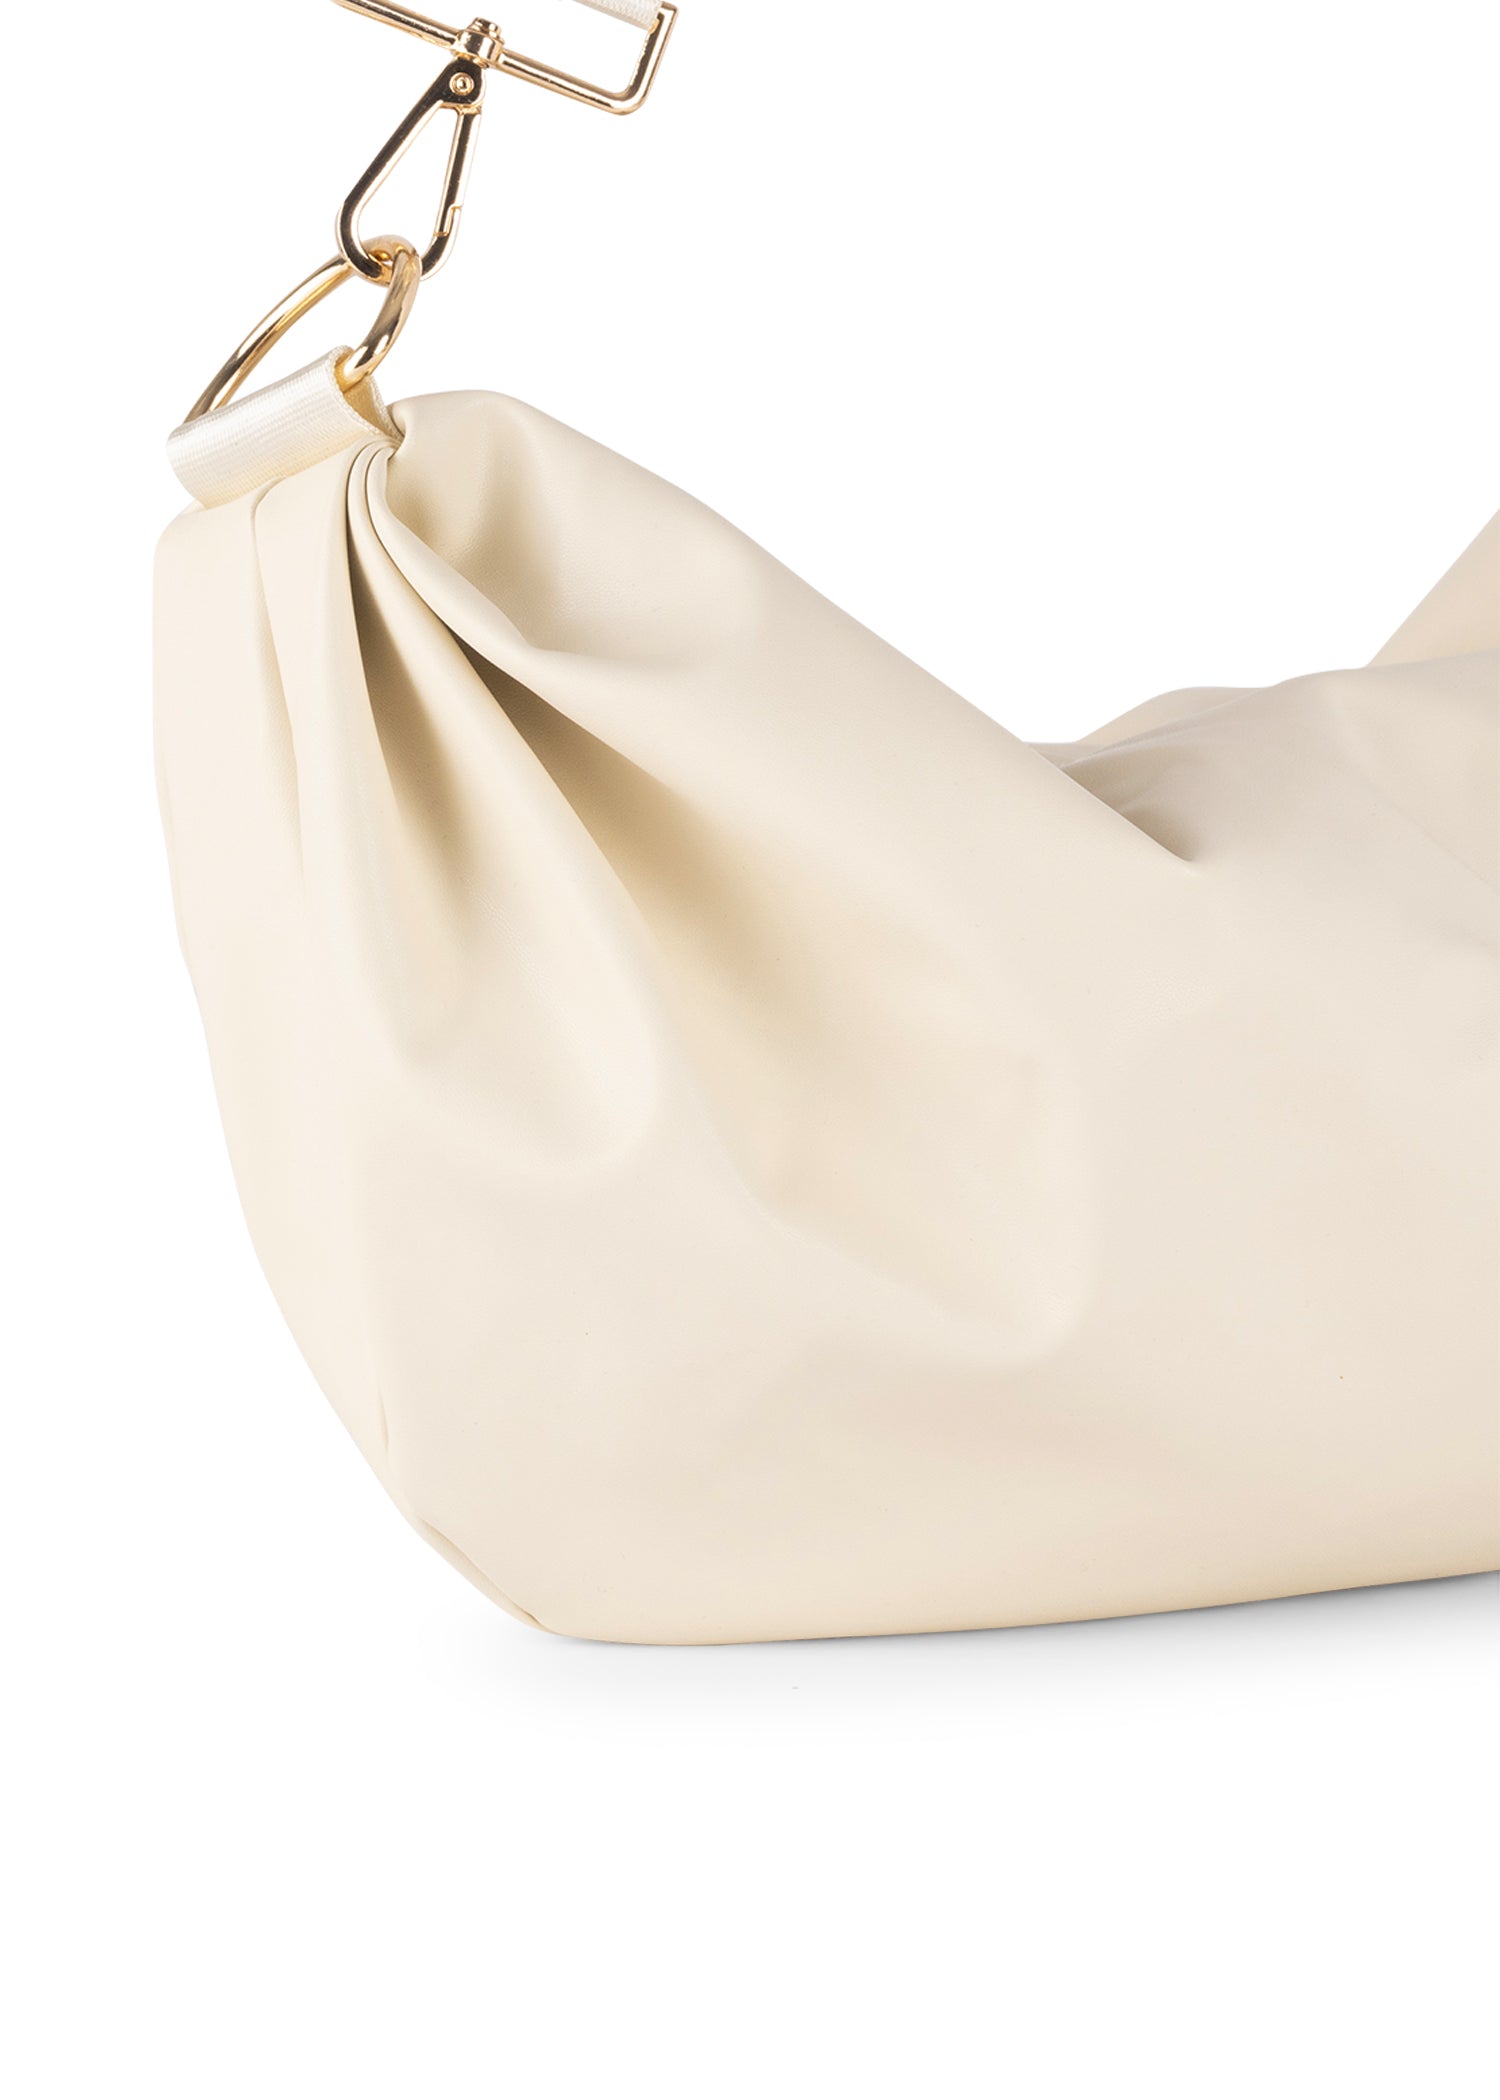 The Ollie Vanilla Sling Bag